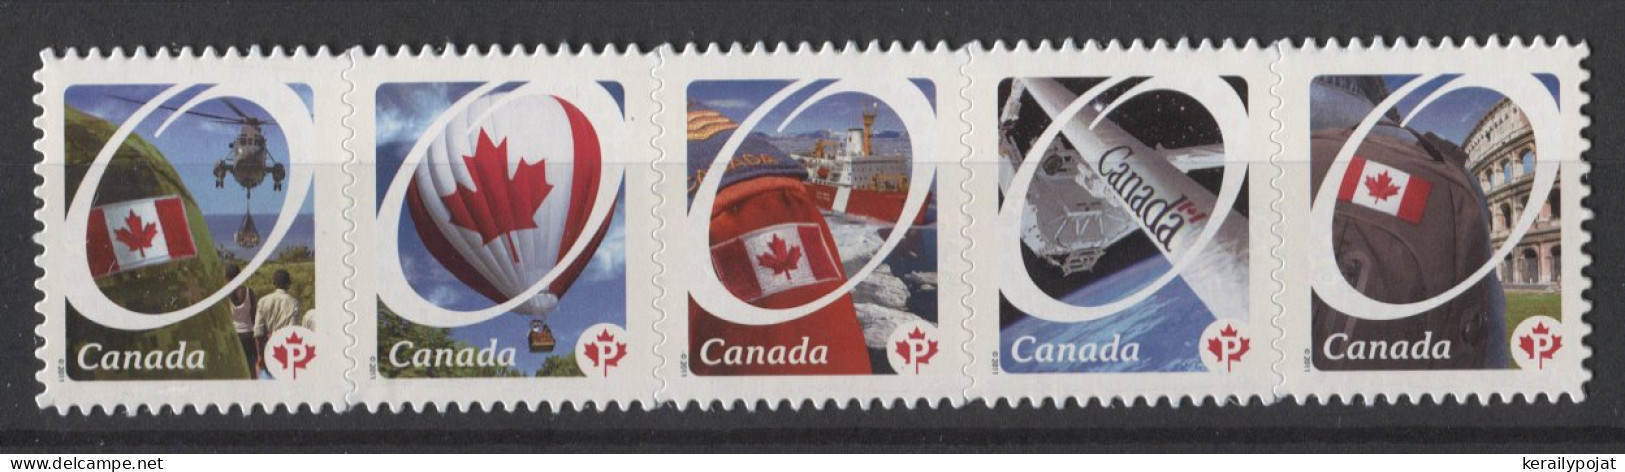 Canada - 2011 National Flag Self-adhesive MNH__(TH-24849) - Nuevos